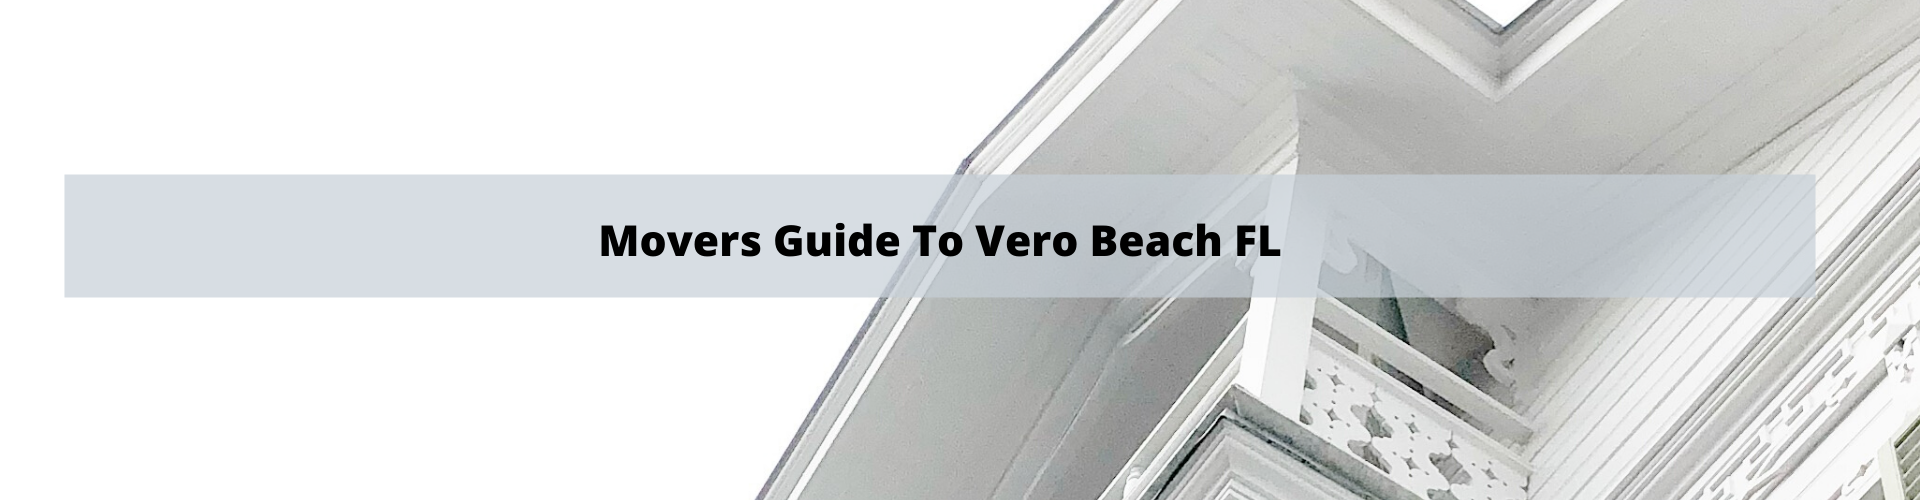 Movers Guide to Vero Beach FL